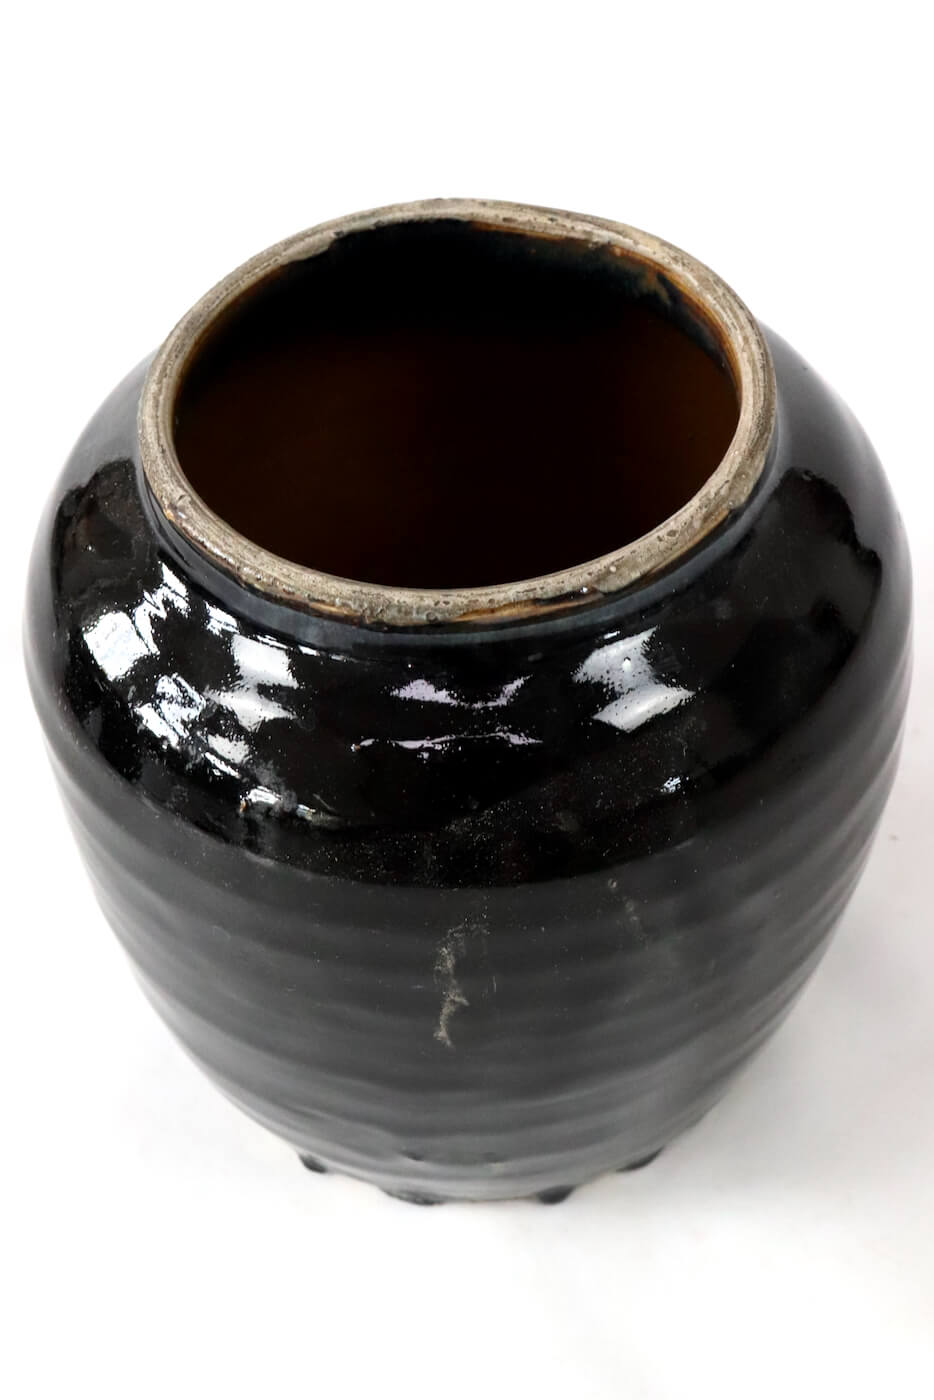 vase keramik china schwarz